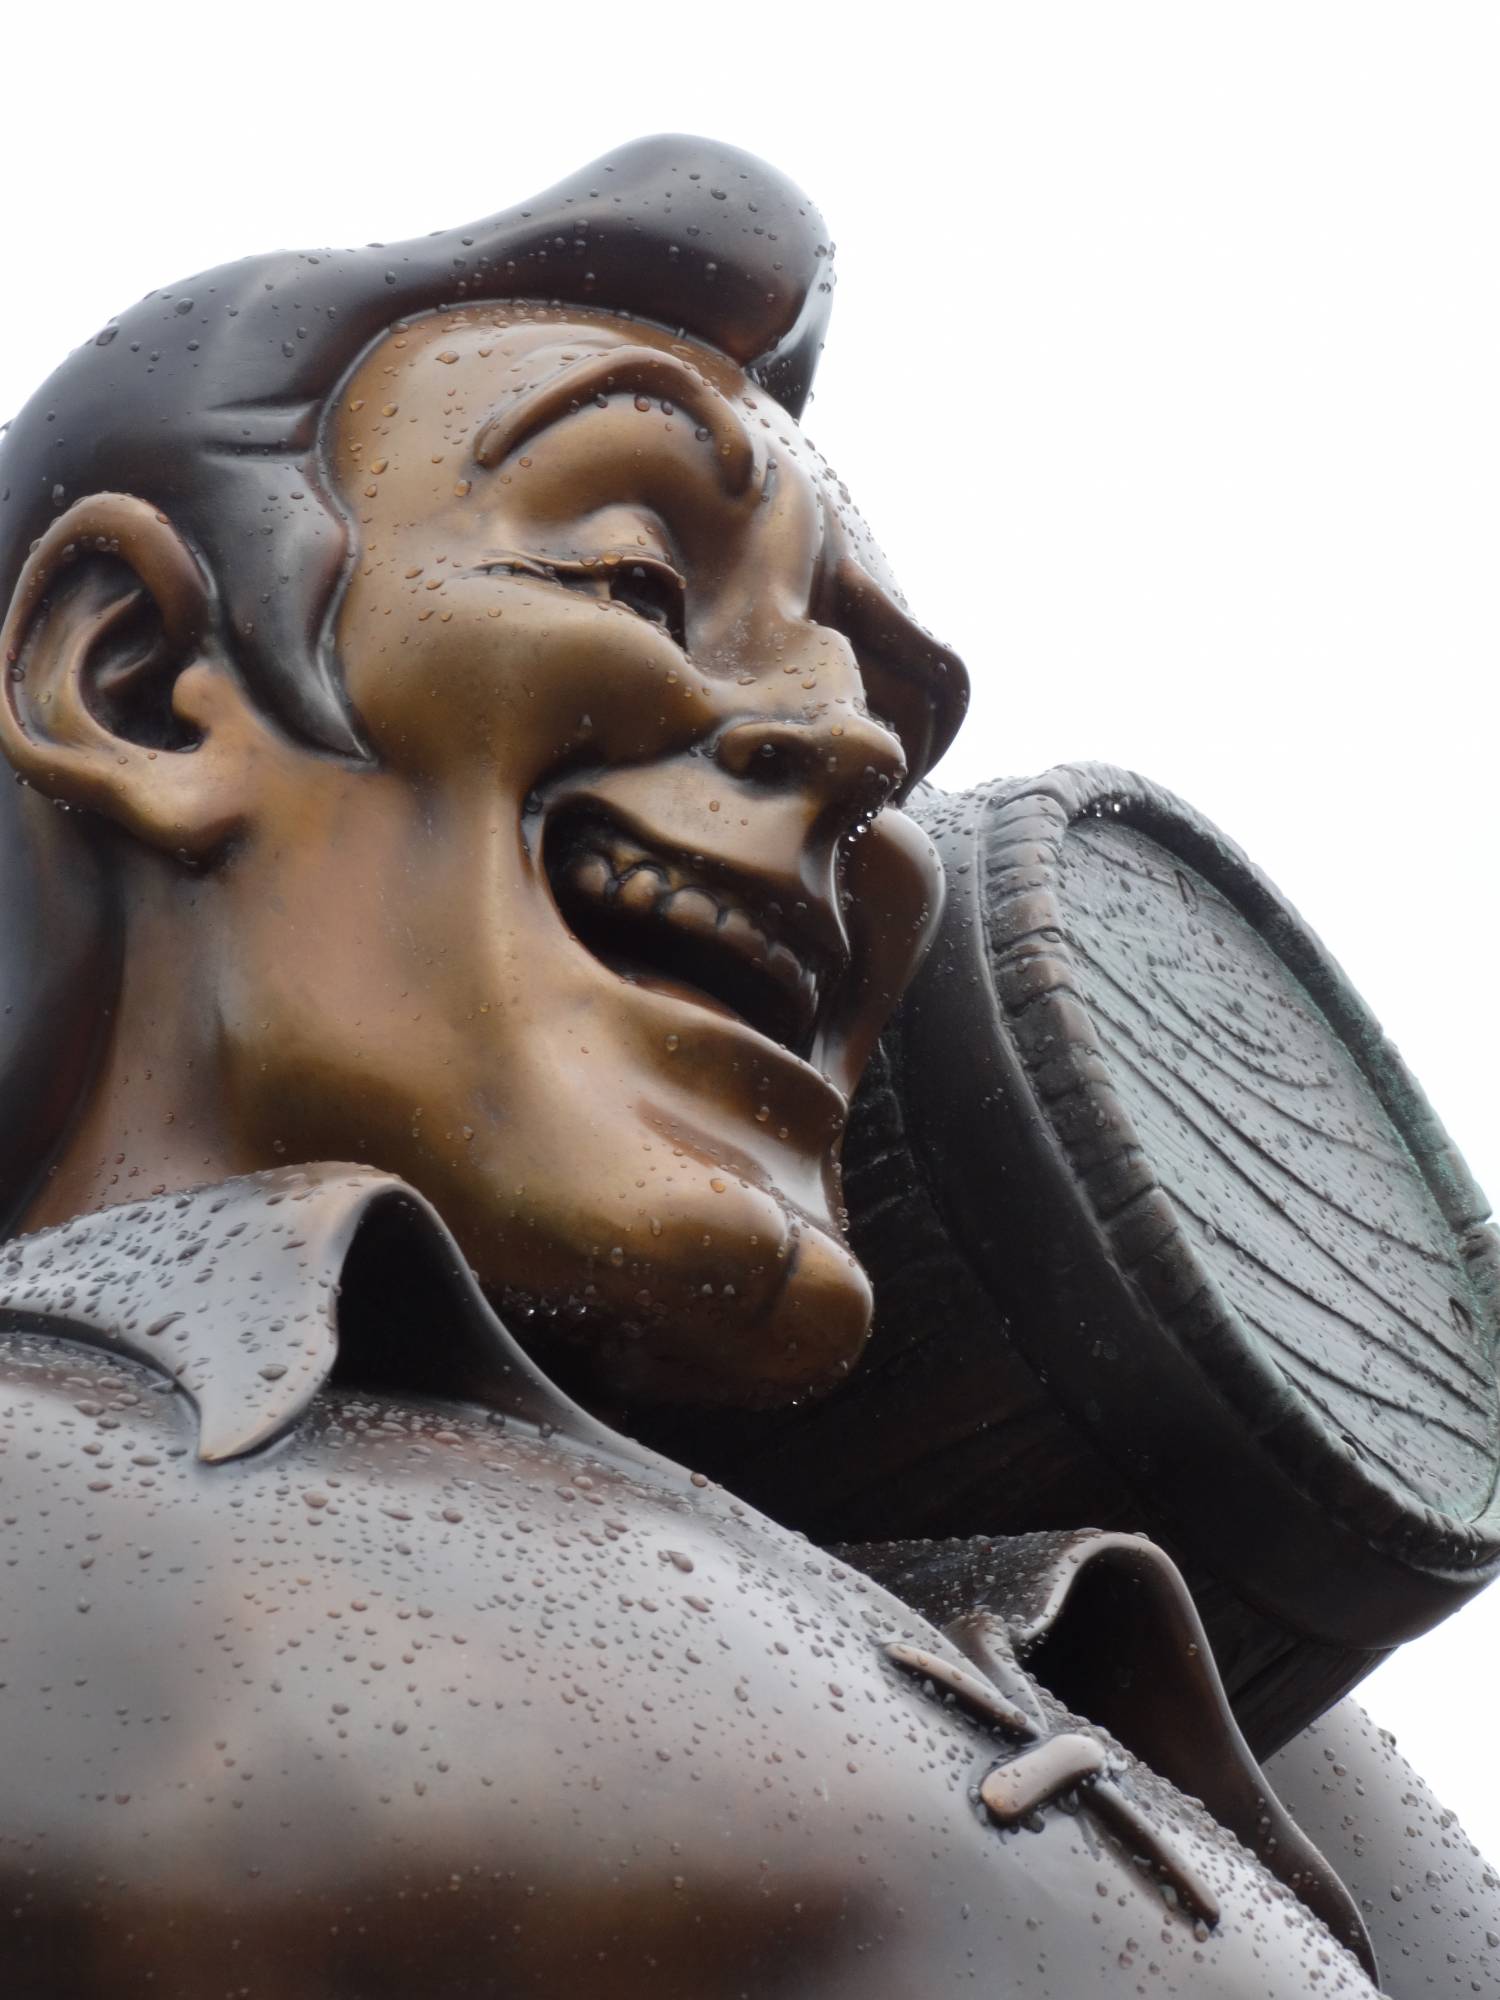 Magic Kingdom - Gaston statue